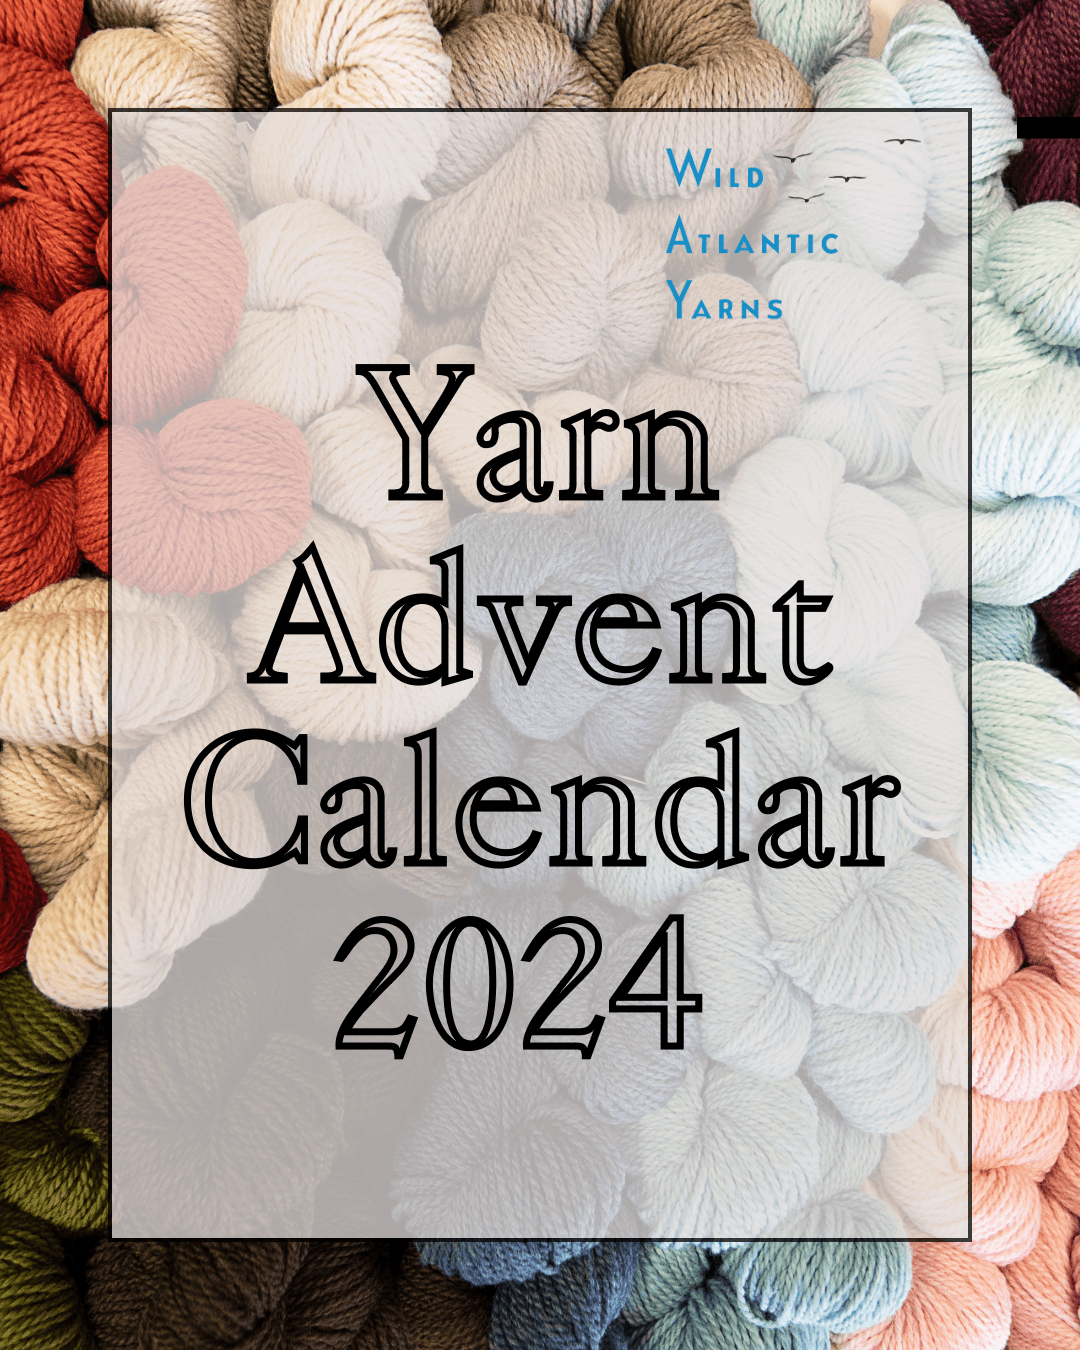 YARN ADVENT CALENDAR 2024 (PRE ORDER) - YARN - Wild Atlantic Yarns